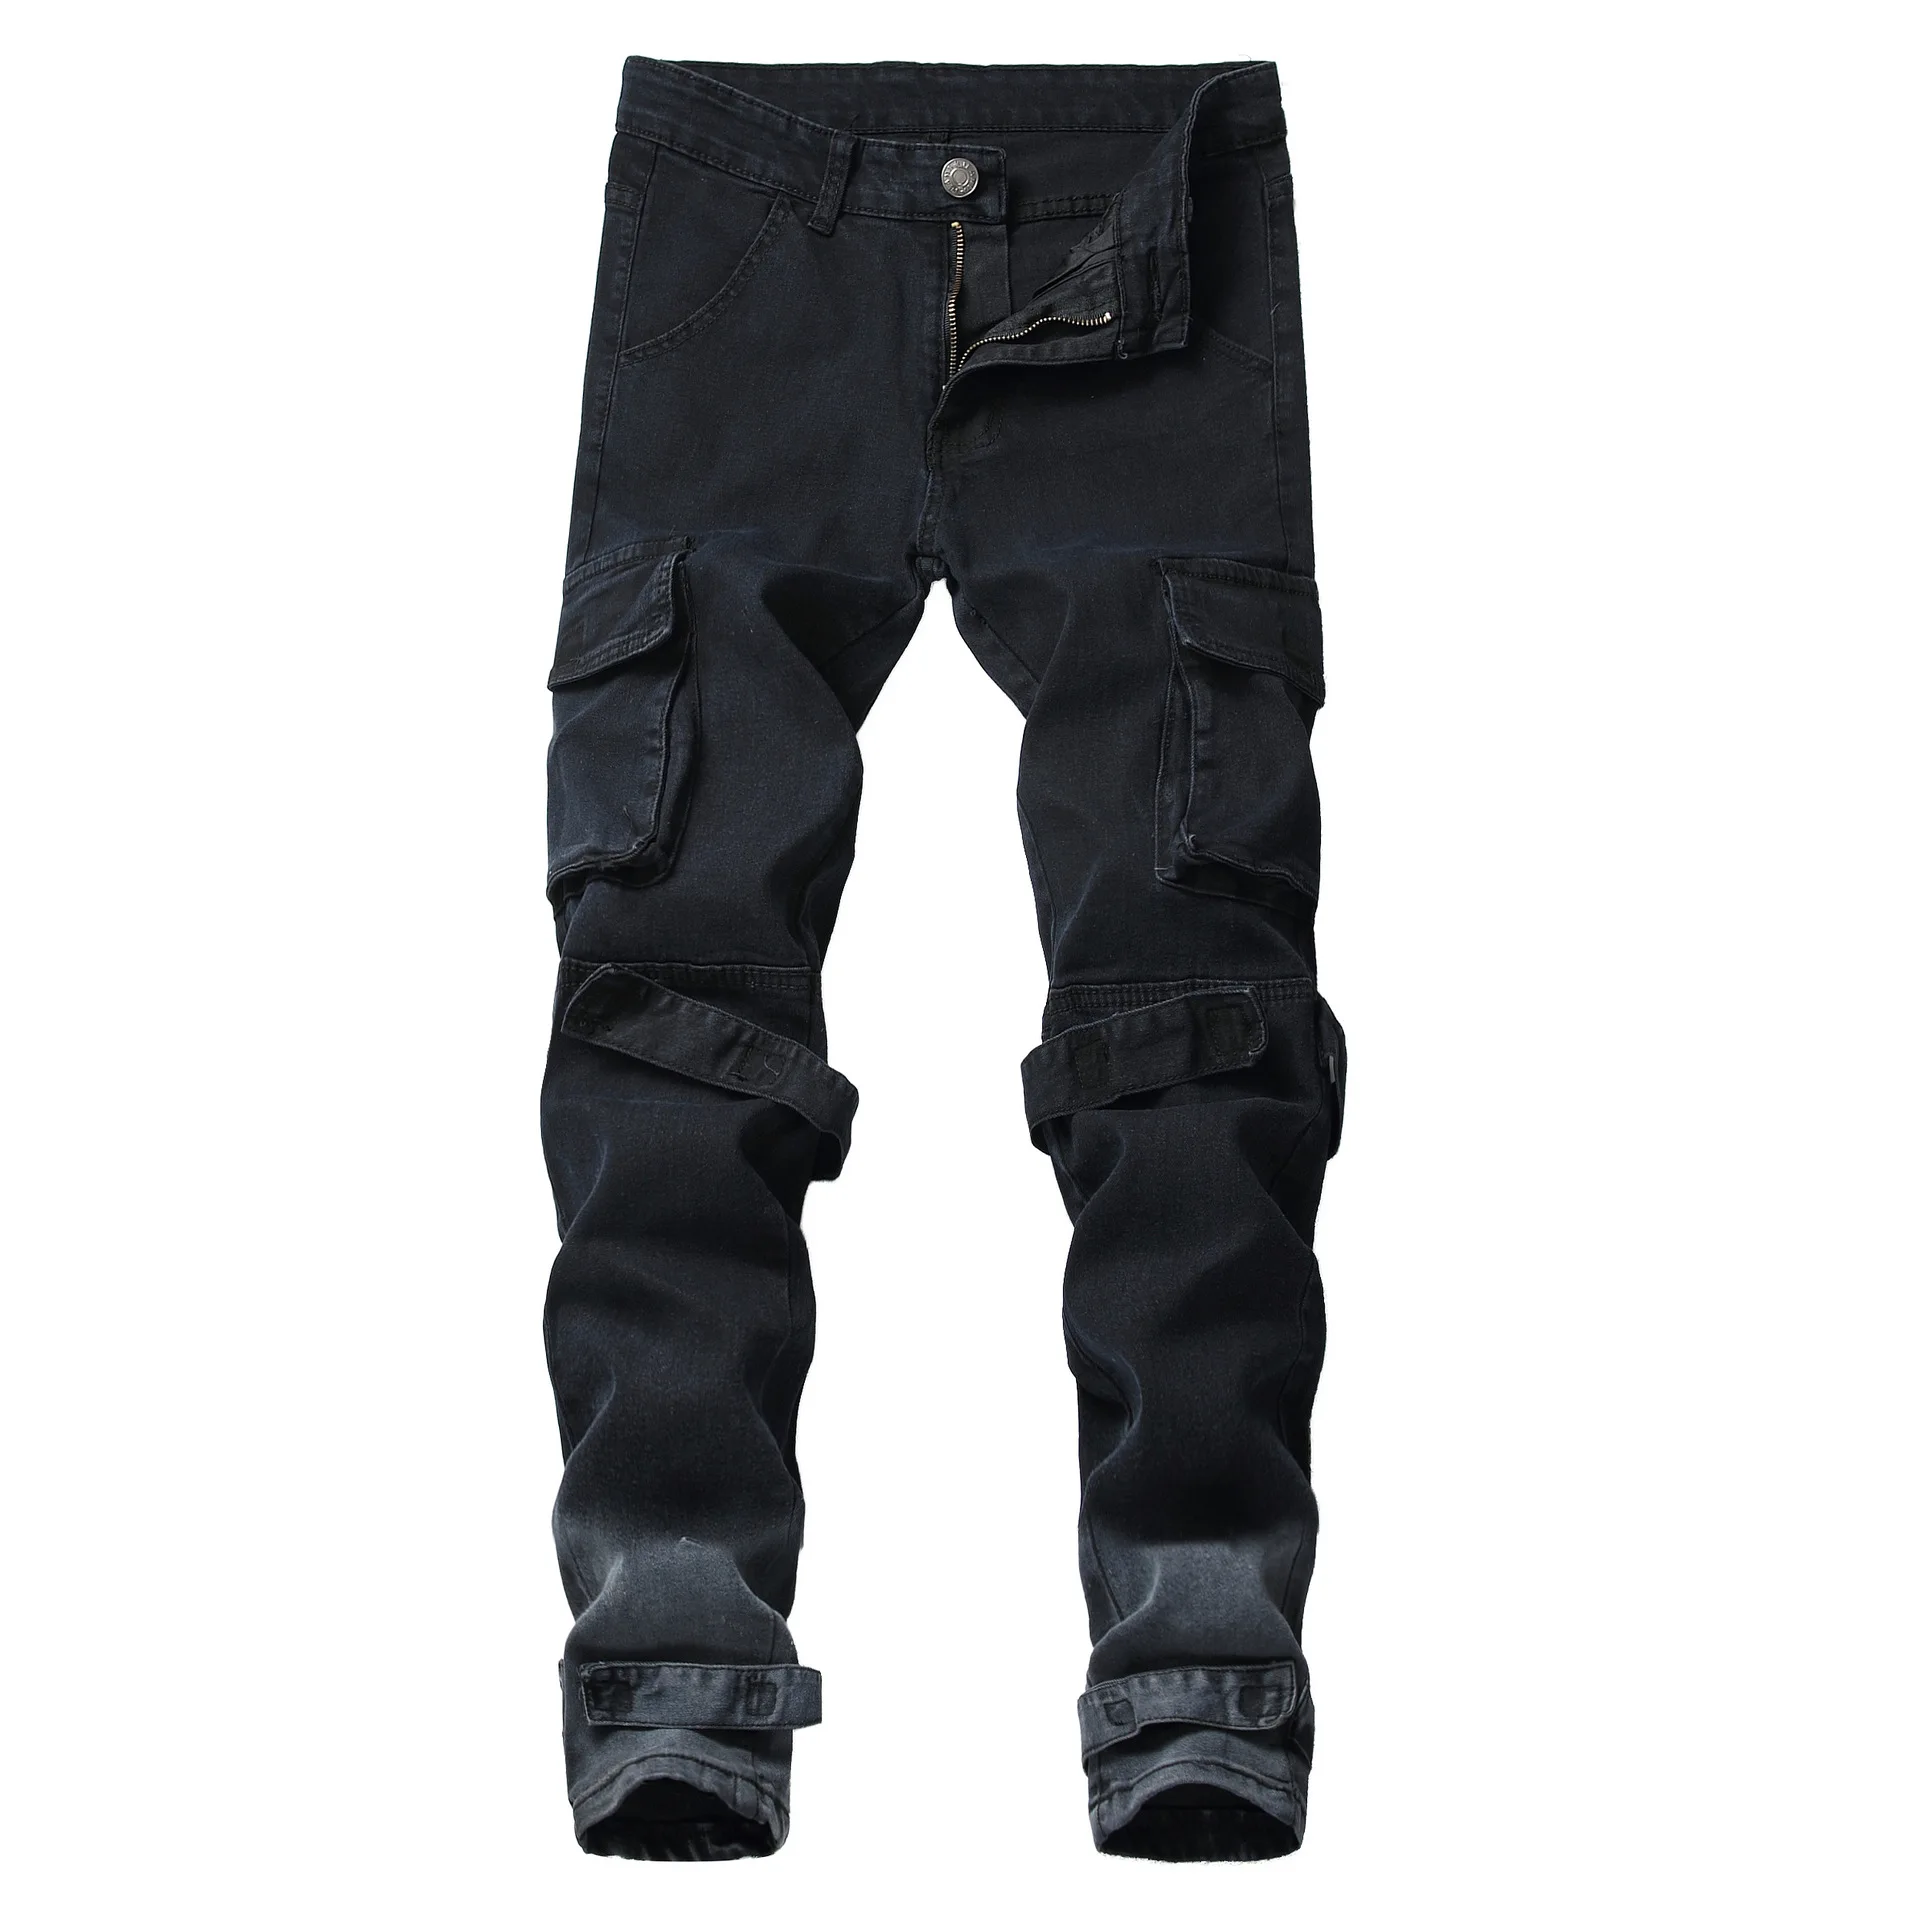 mens designer cargo pants